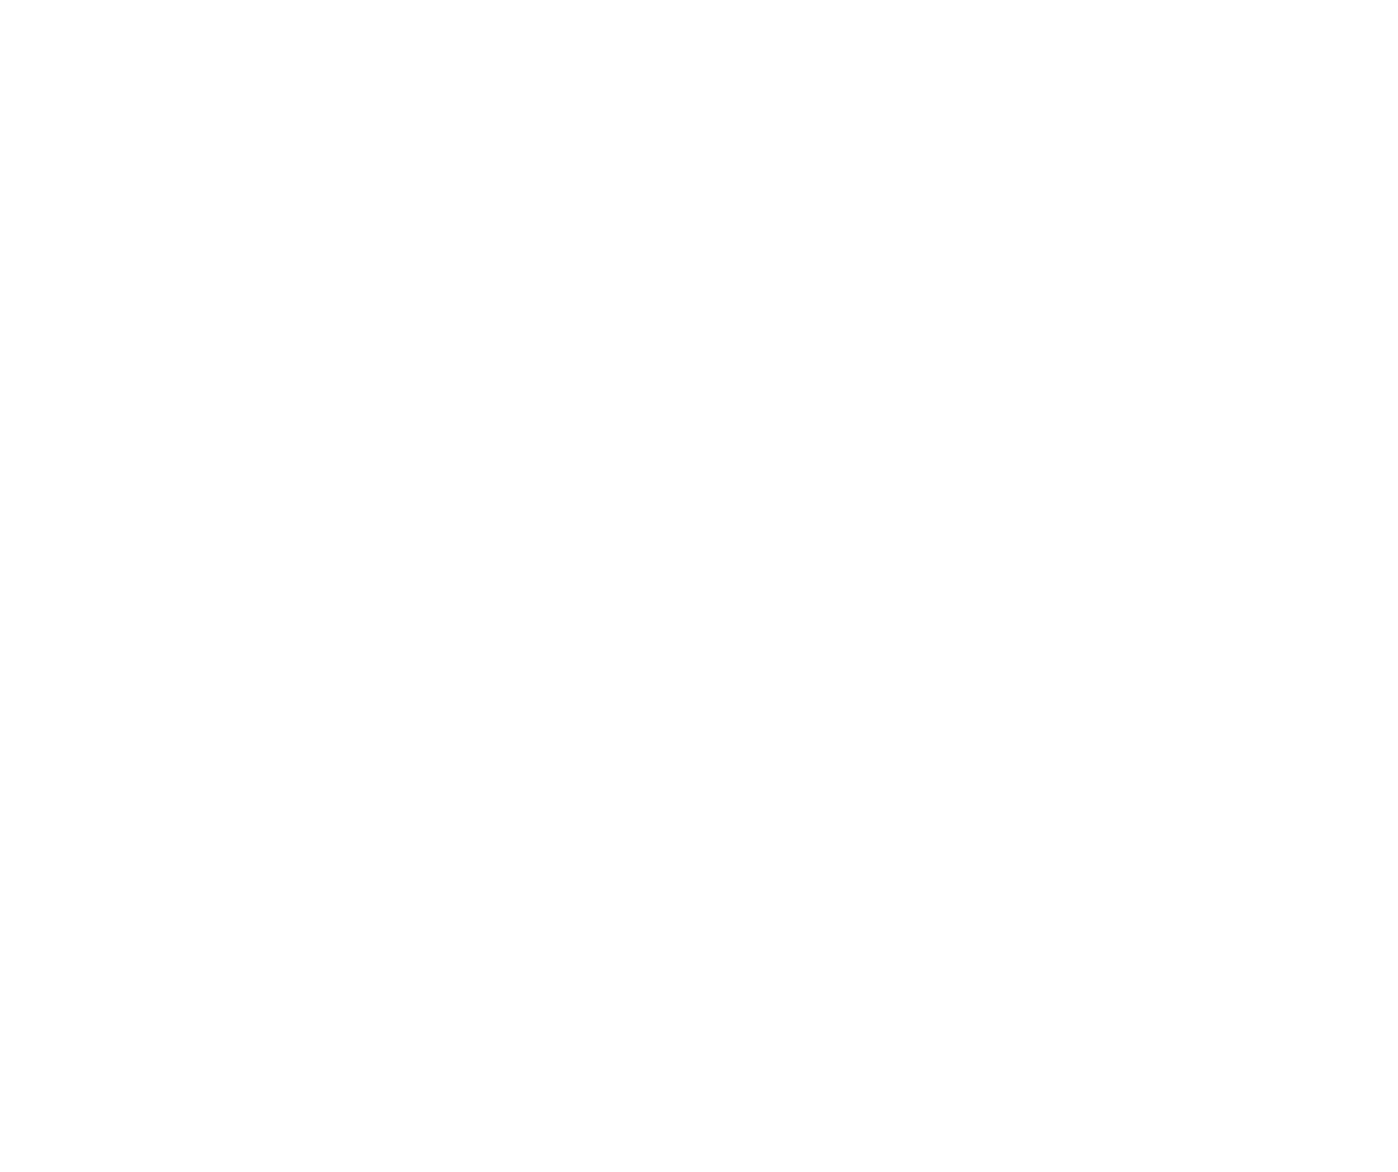 WB Television